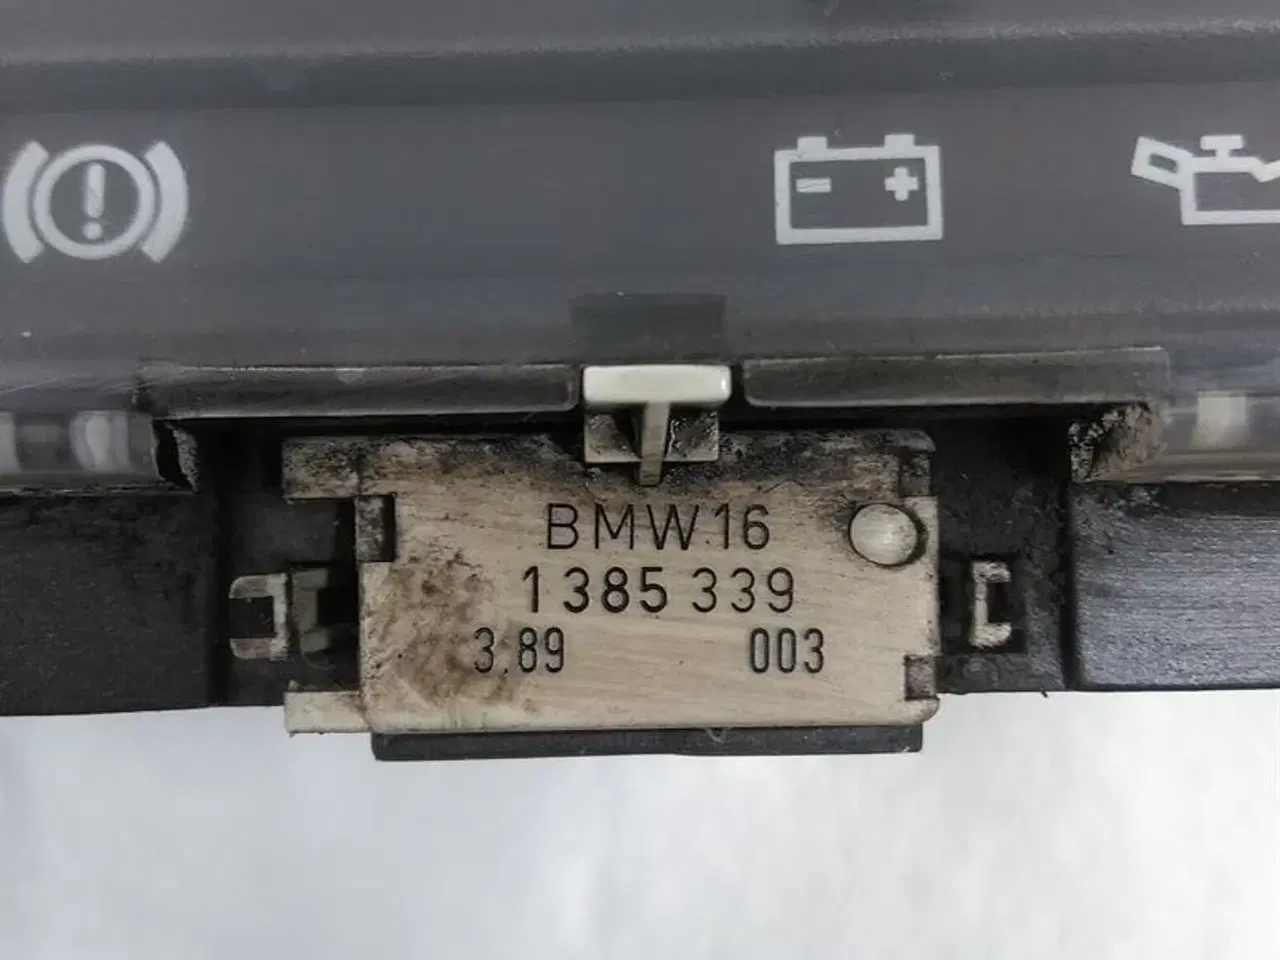 Billede 7 - Instrumentkombi MotoMeter Brugt 492015 km E13284 BMW E30